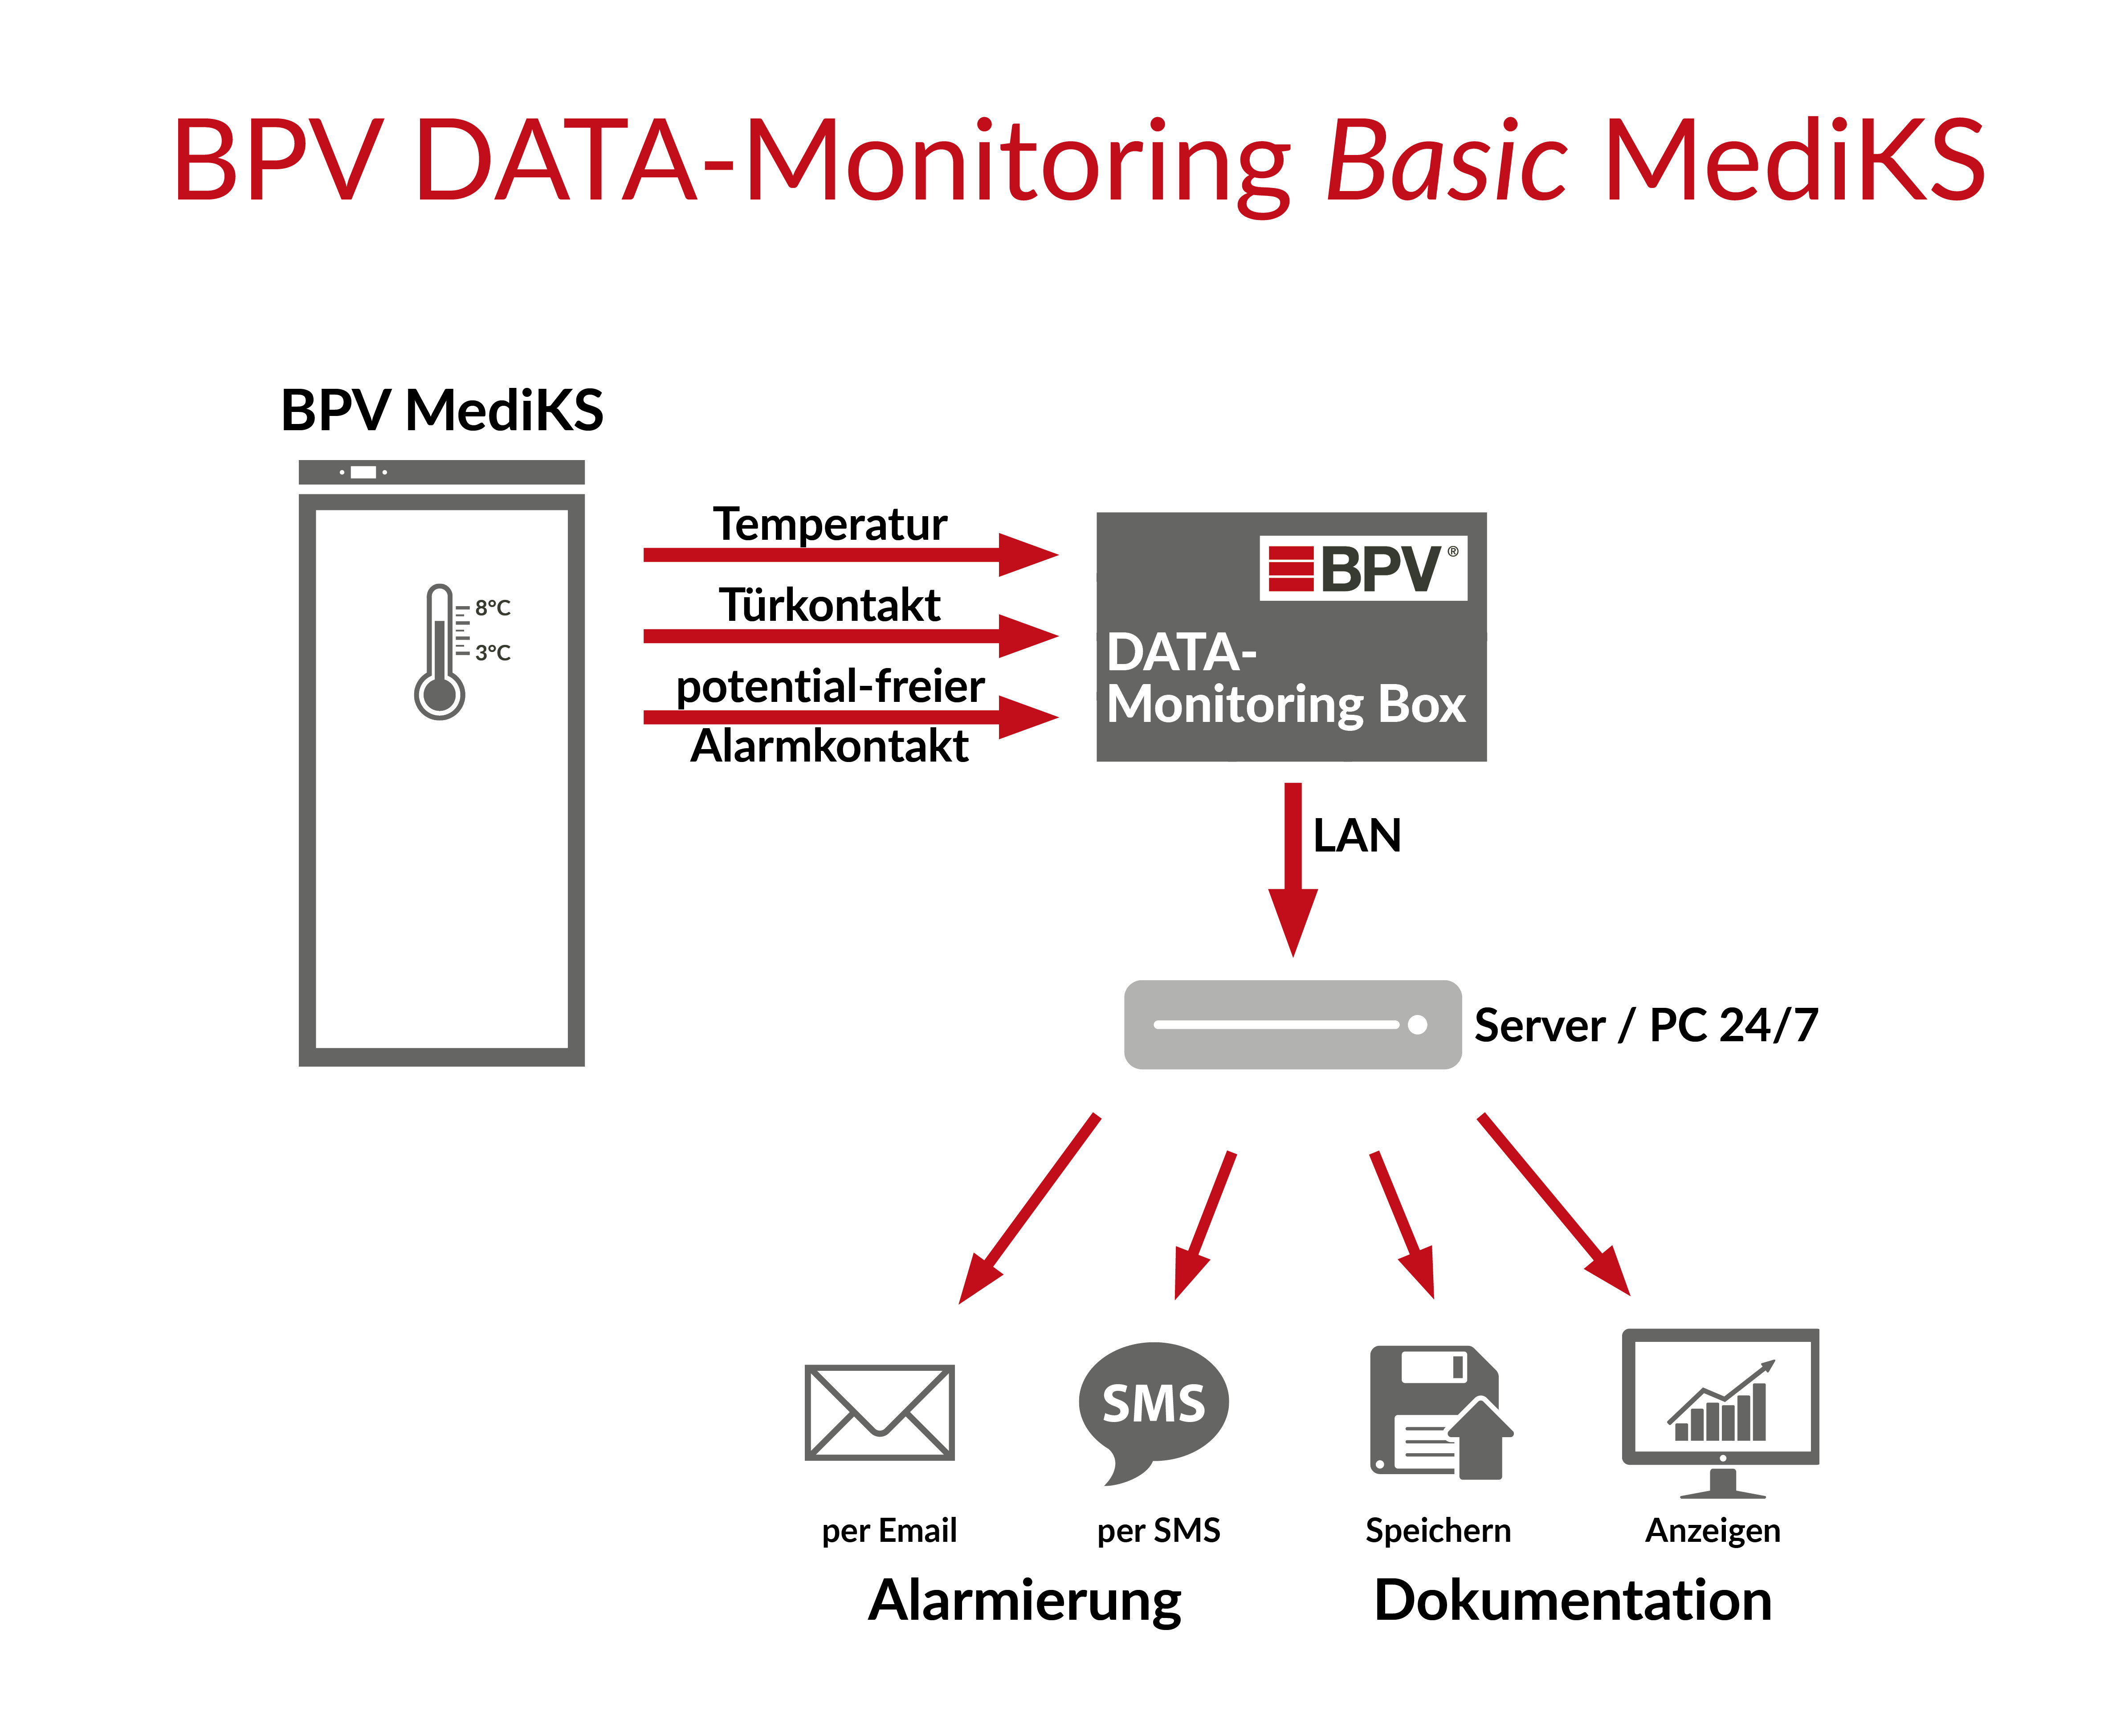 BPV DATA-Monitoring MediKS